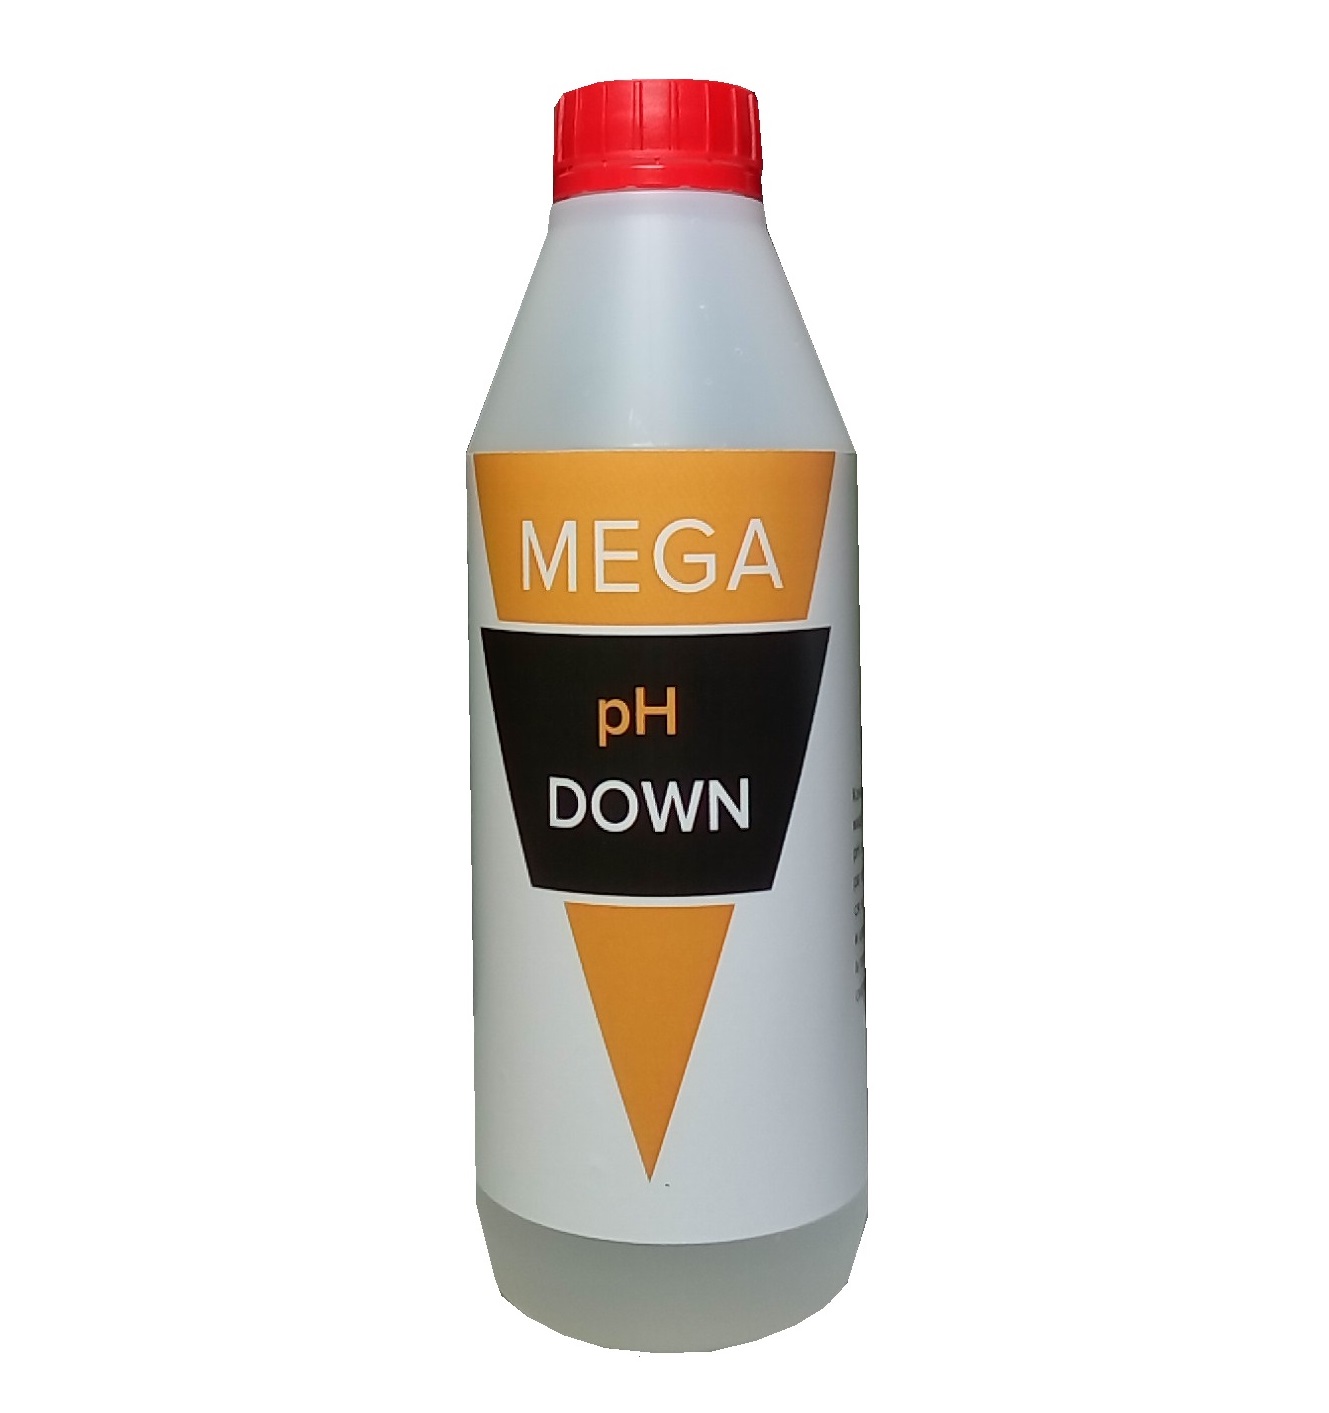 Mega Ph Down 1L понизитель РН 1 л